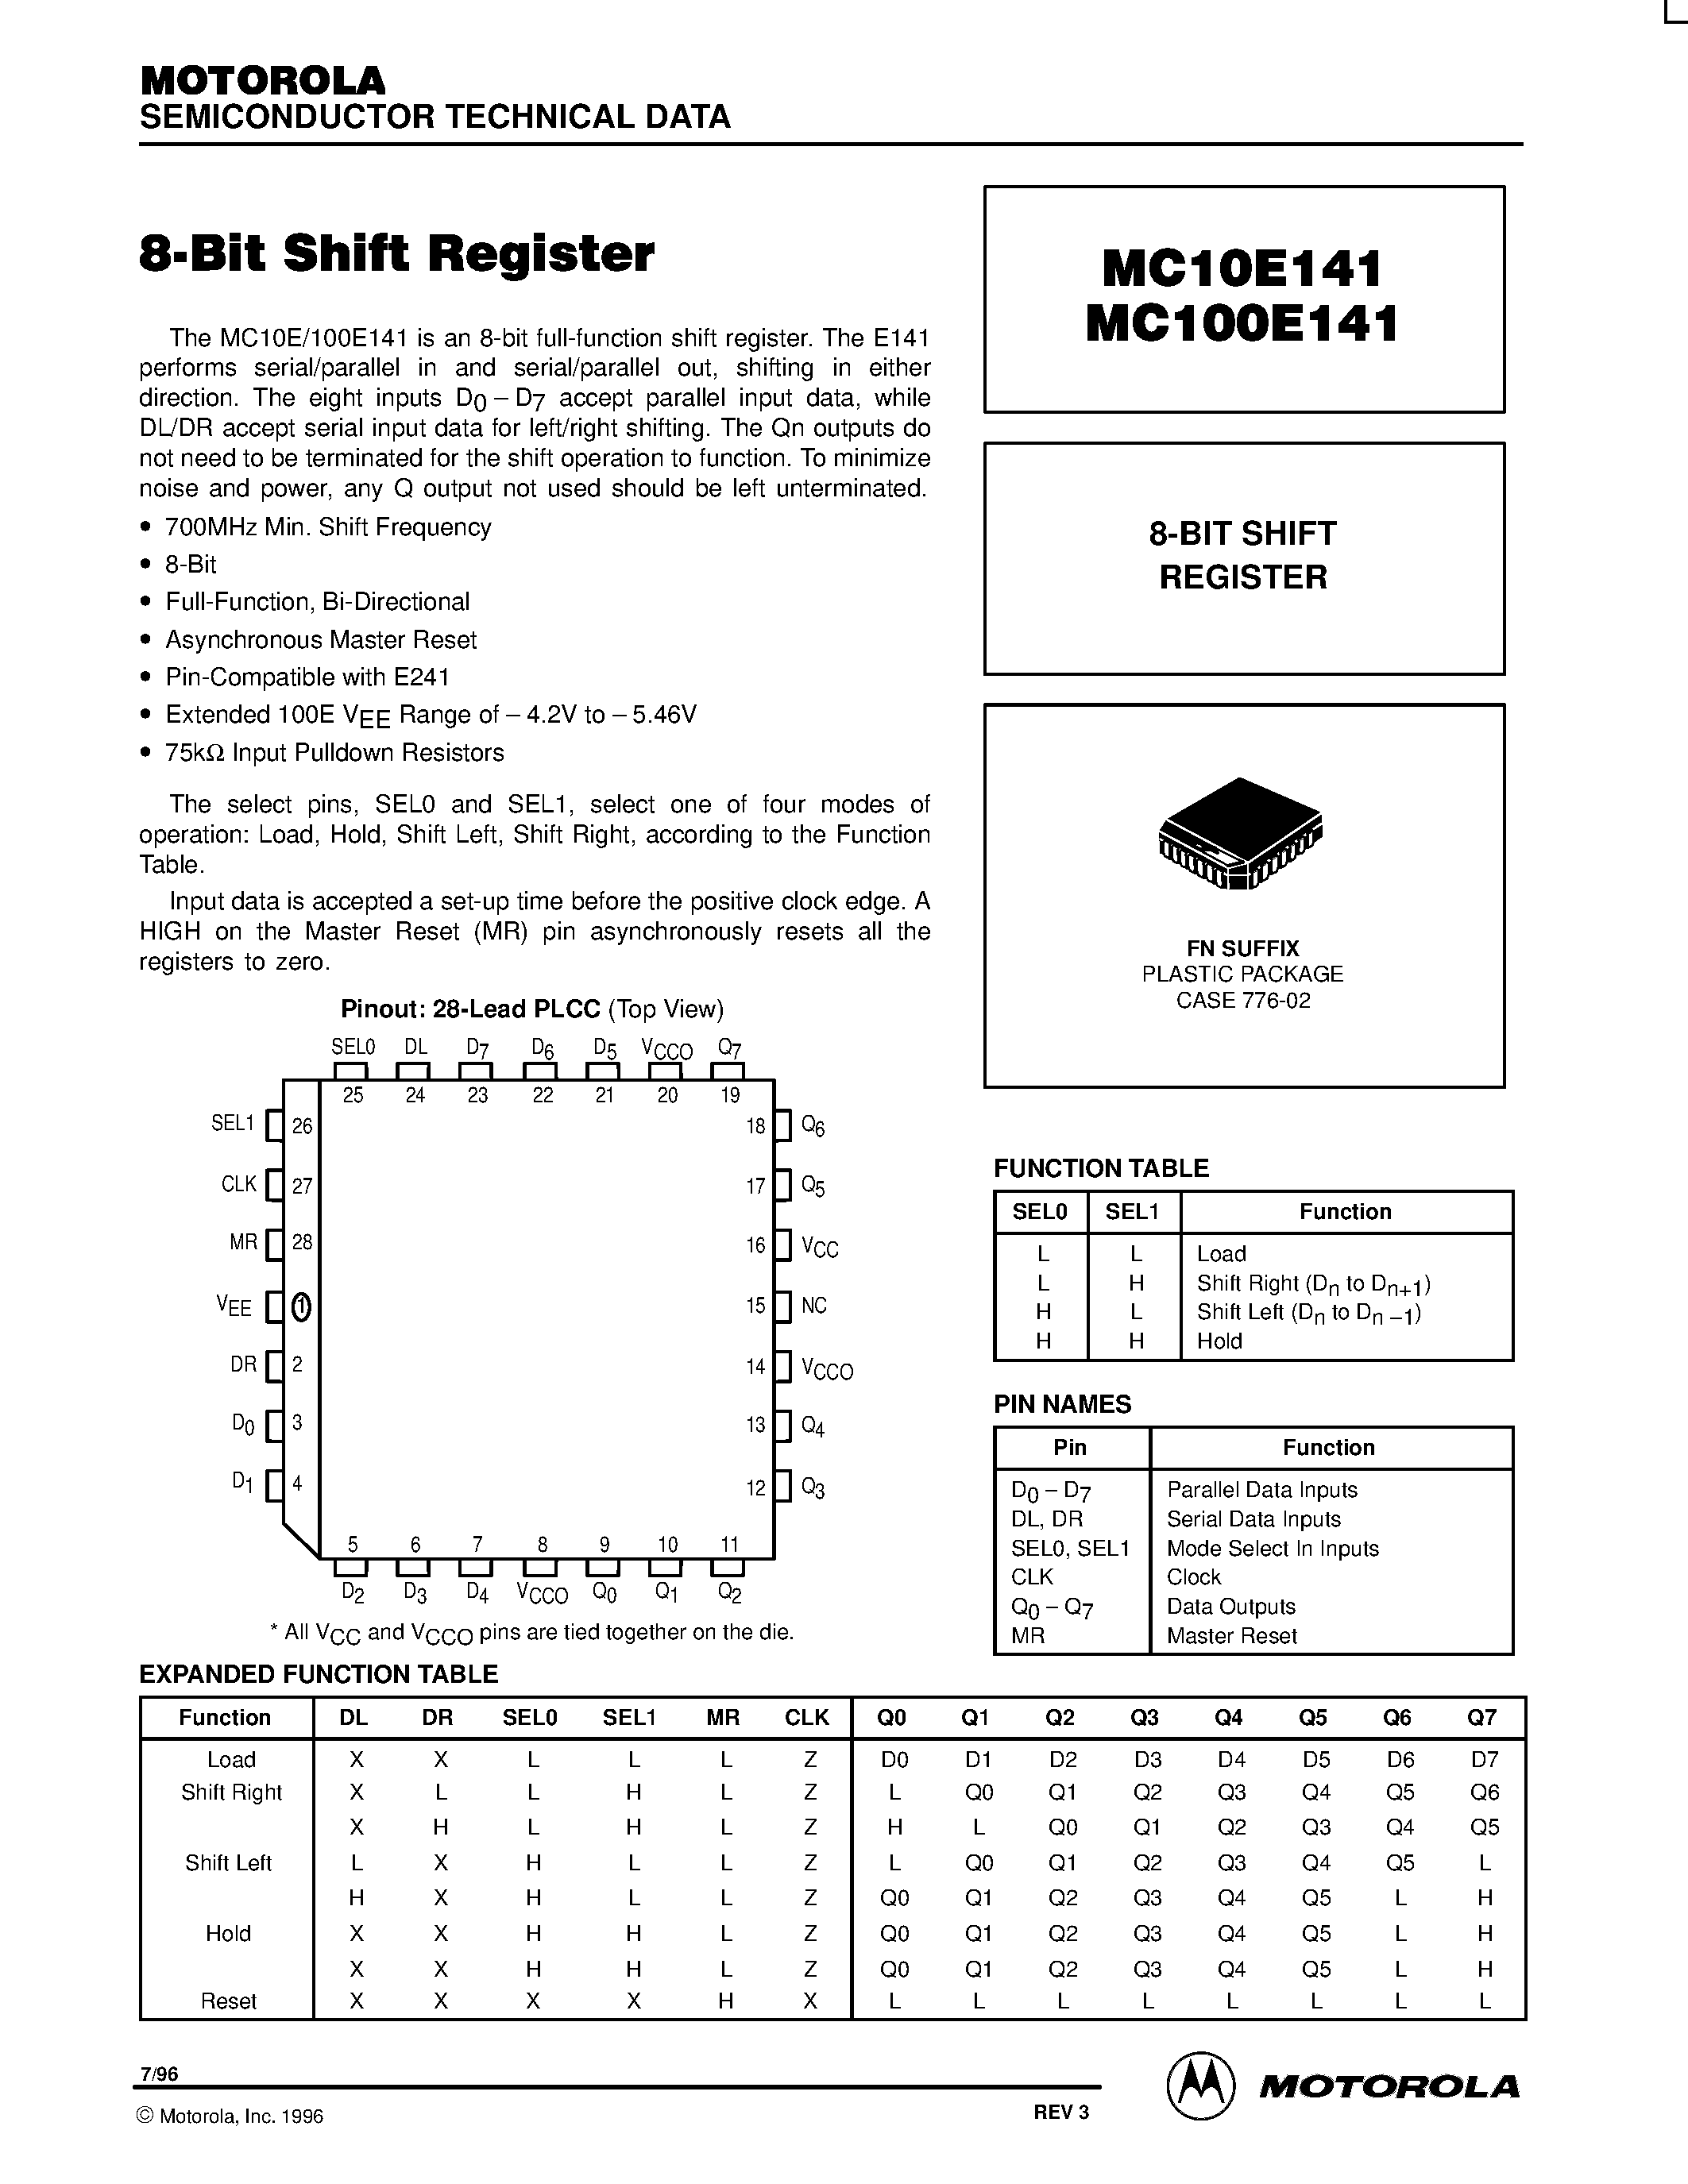 Datasheet MC100E141FN - 8-BIT SHIFT REGISTER page 1